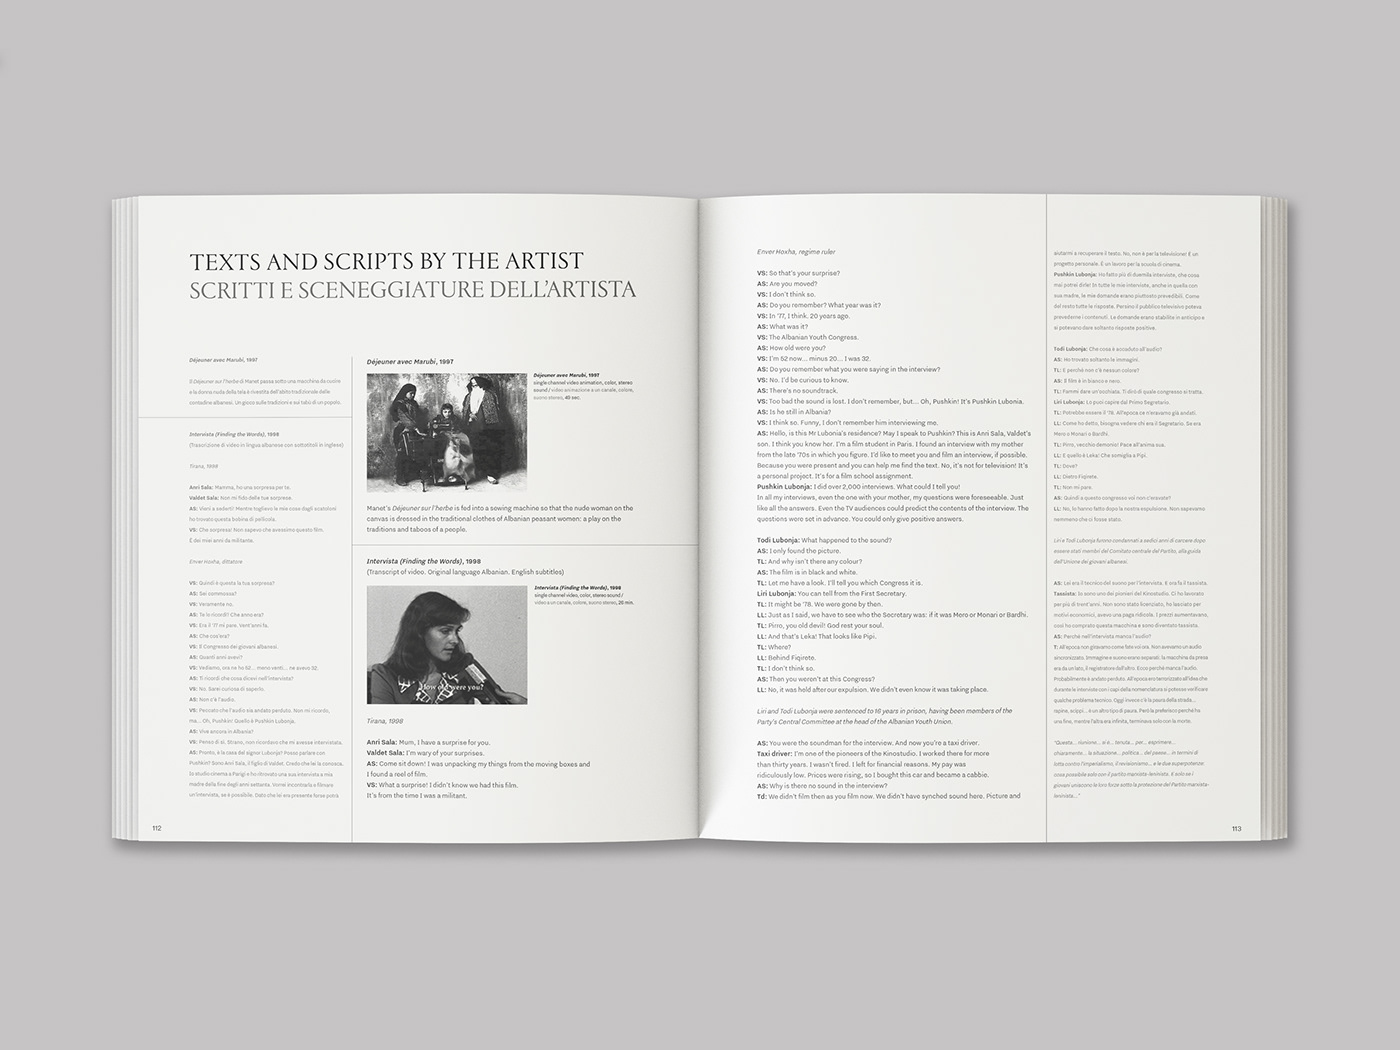 Anri Sala展览画册设计